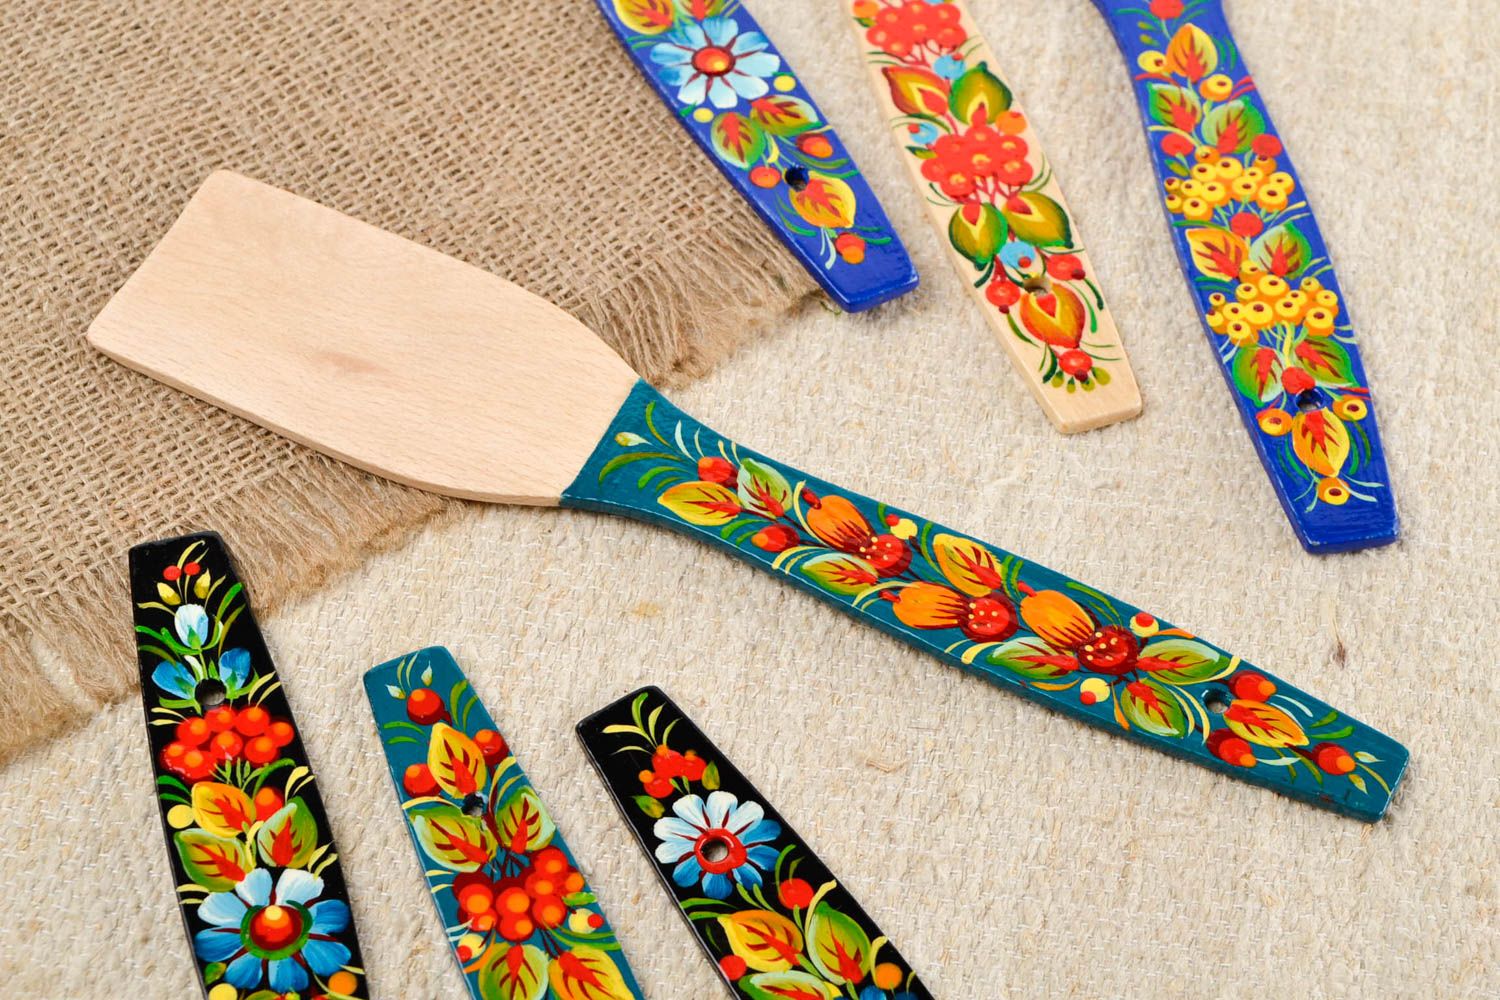 Handmade wooden spatula kitchen utensils kitchen tools spatula designs photo 1